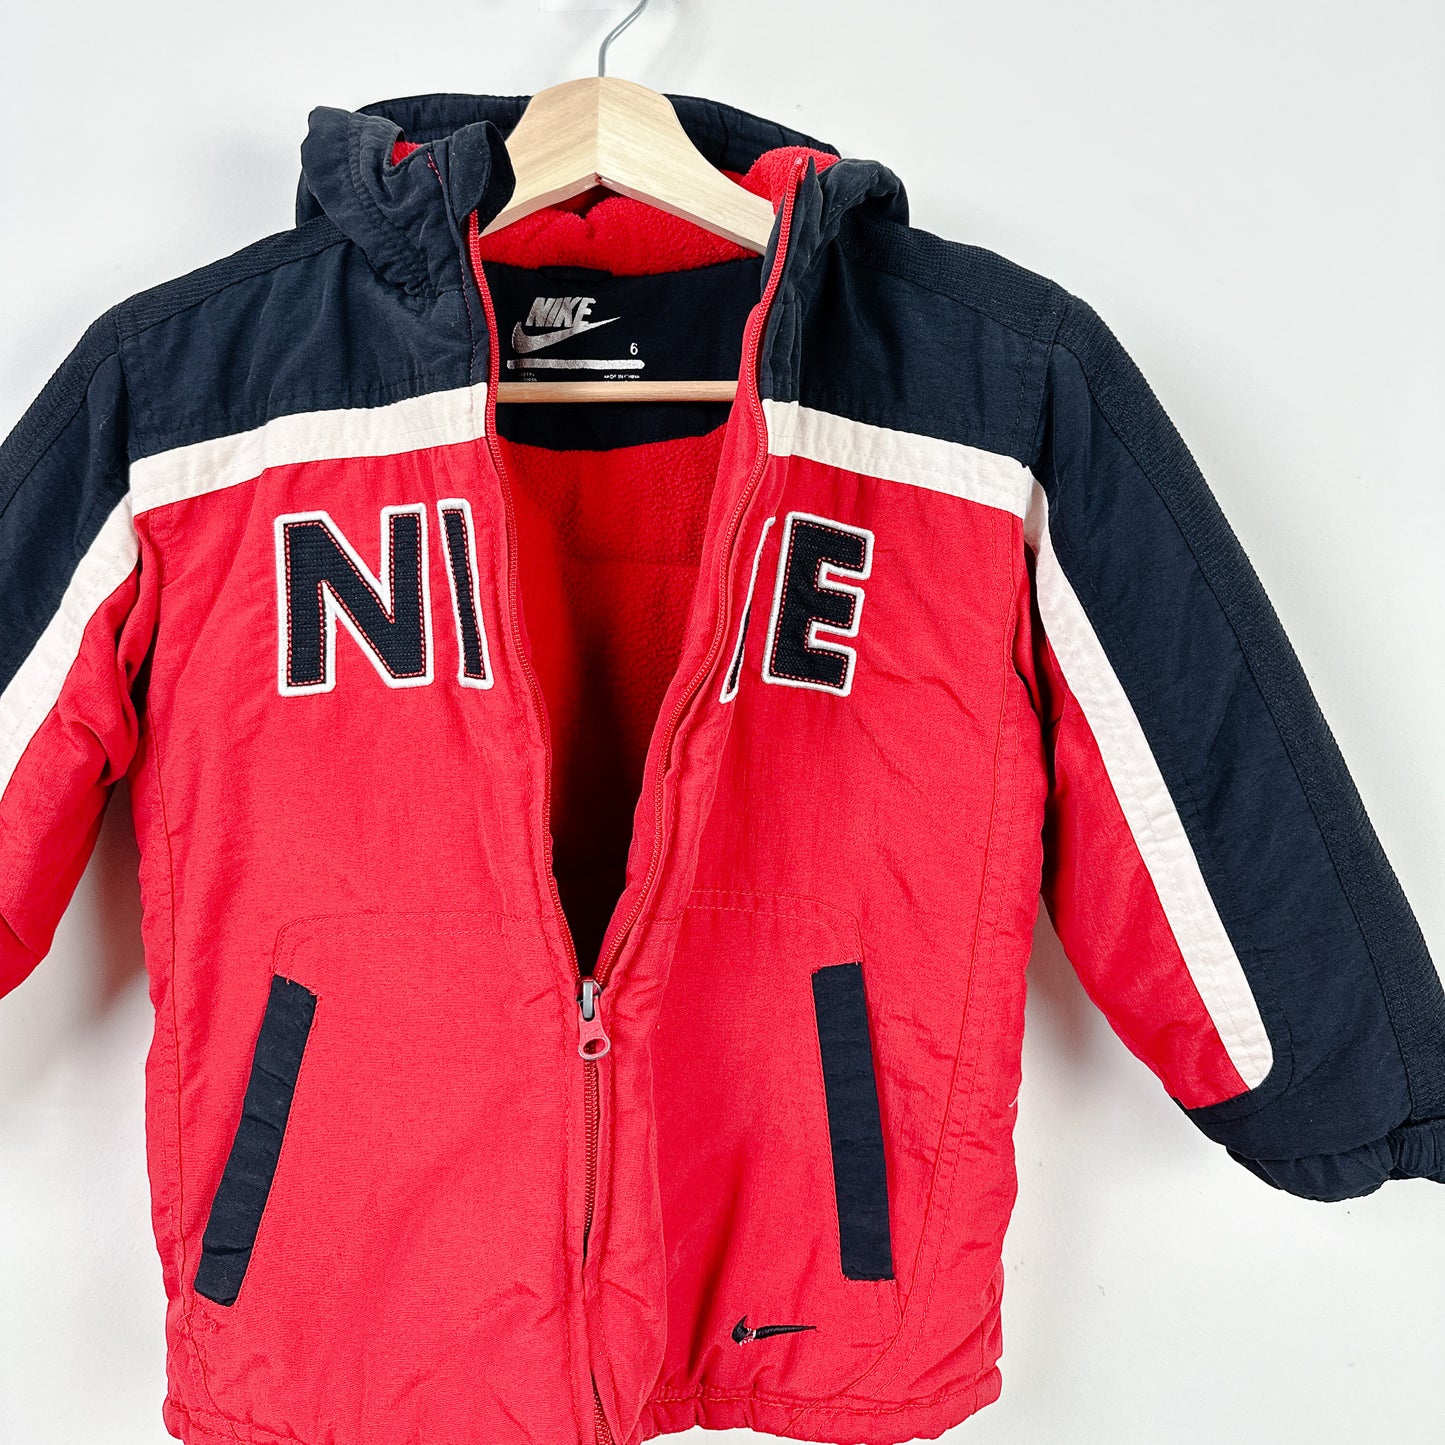 90's Kids Nike Jacket - Size 6